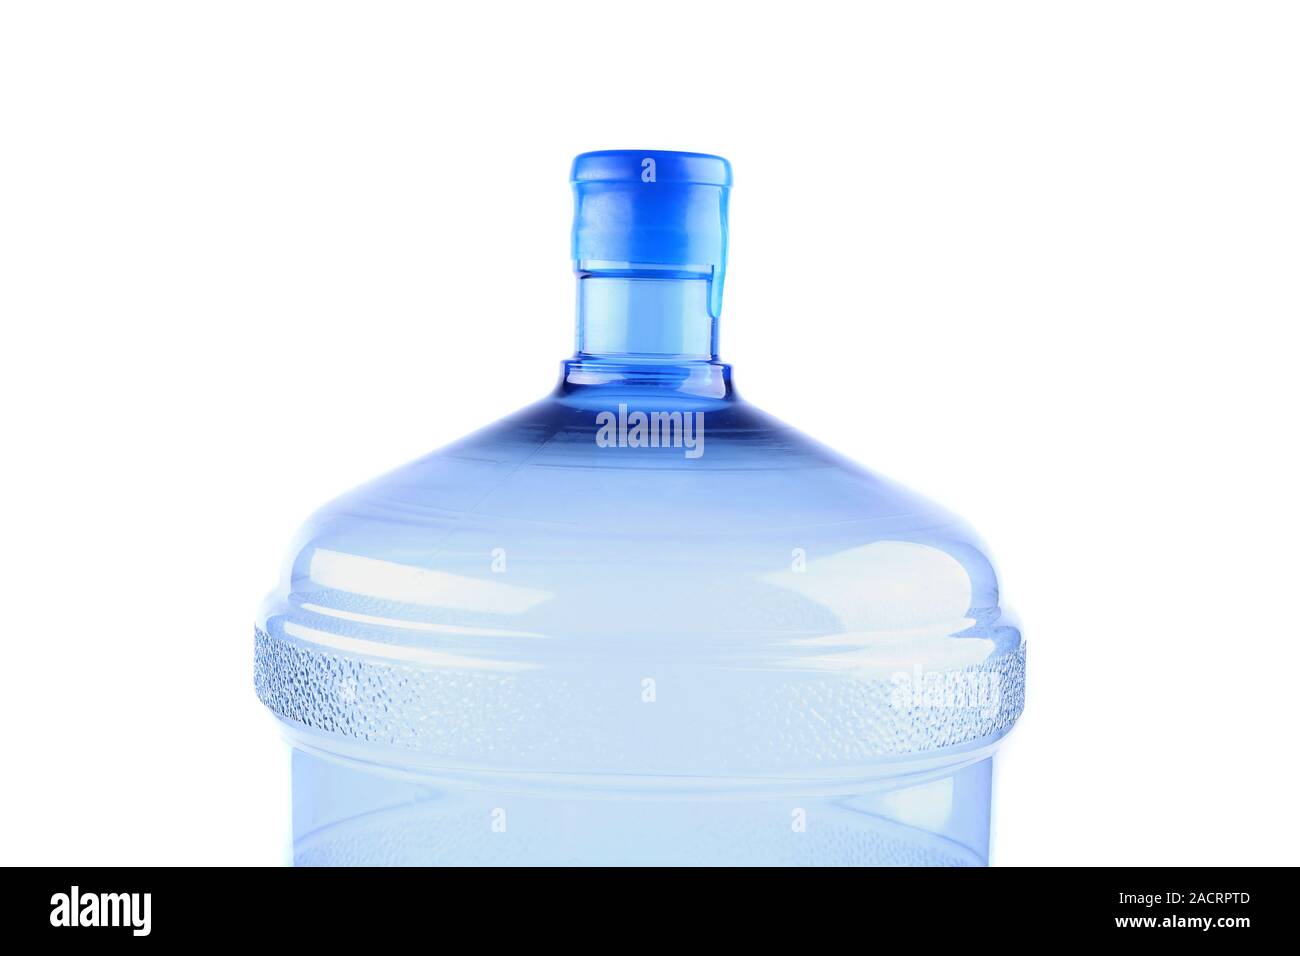 https://c8.alamy.com/comp/2ACRPTD/top-big-bottle-of-water-for-delivery-2ACRPTD.jpg